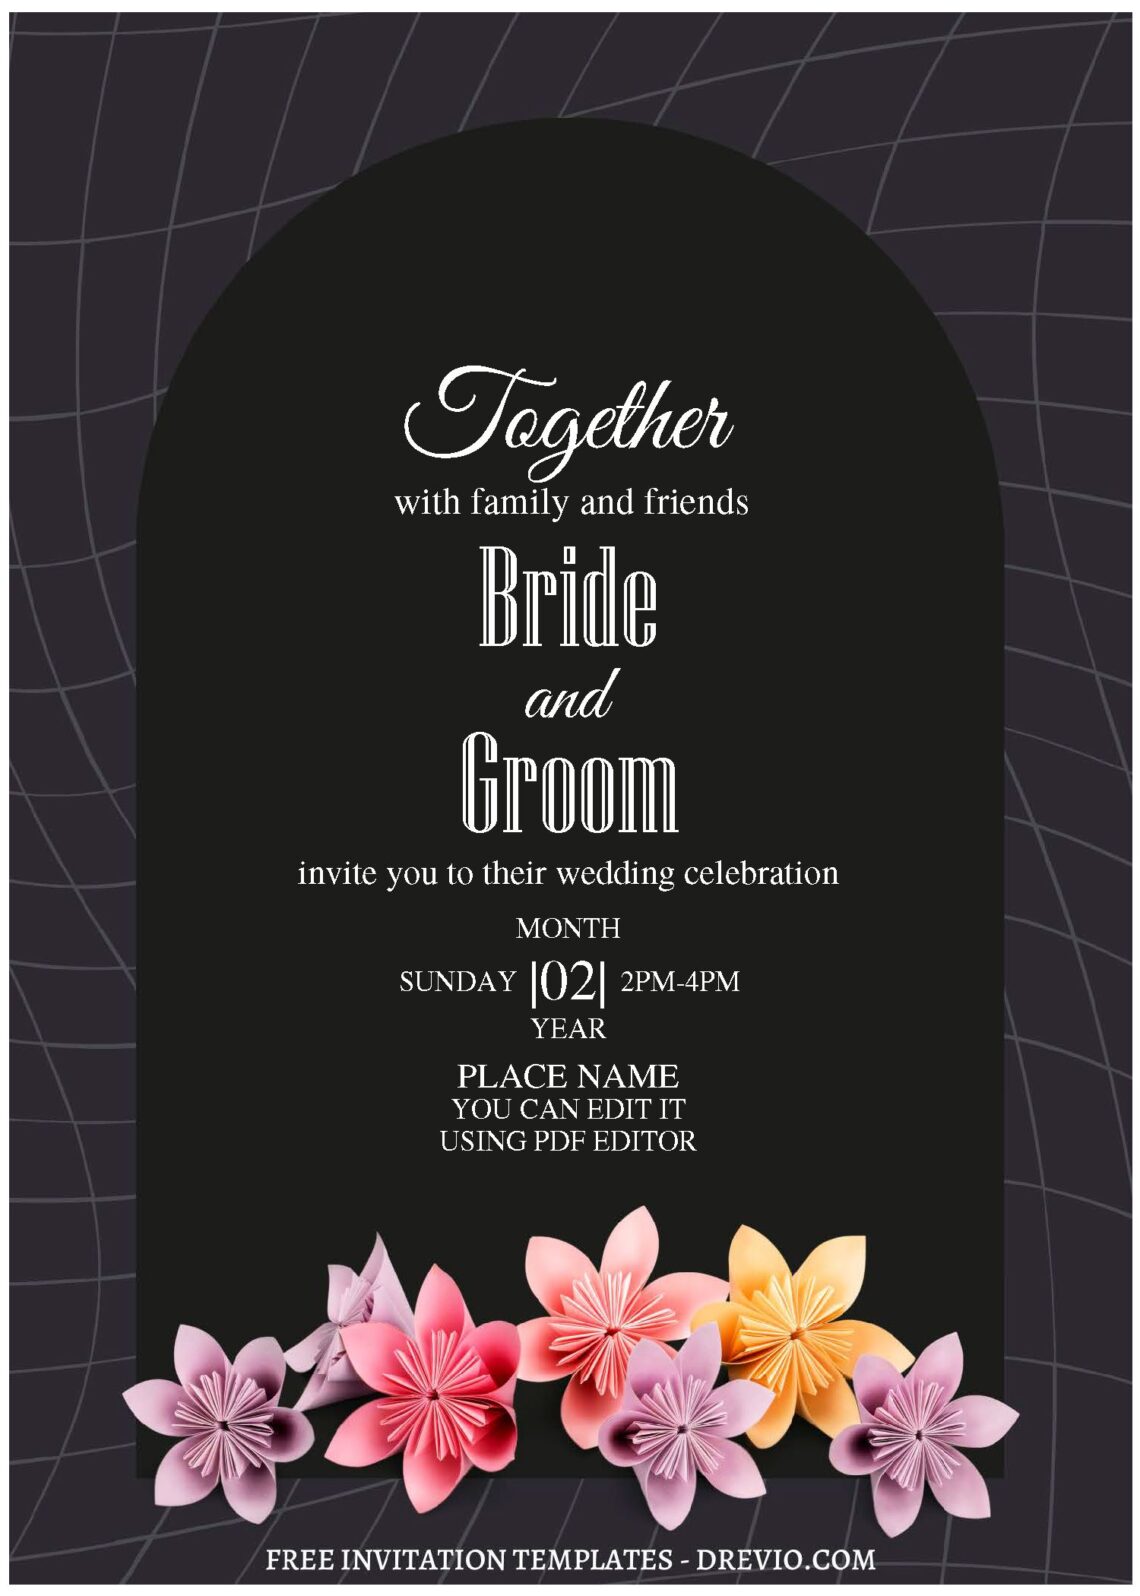 (Free Editable PDF) Magic Garden Wedding Invitation Templates with dark raisin black background